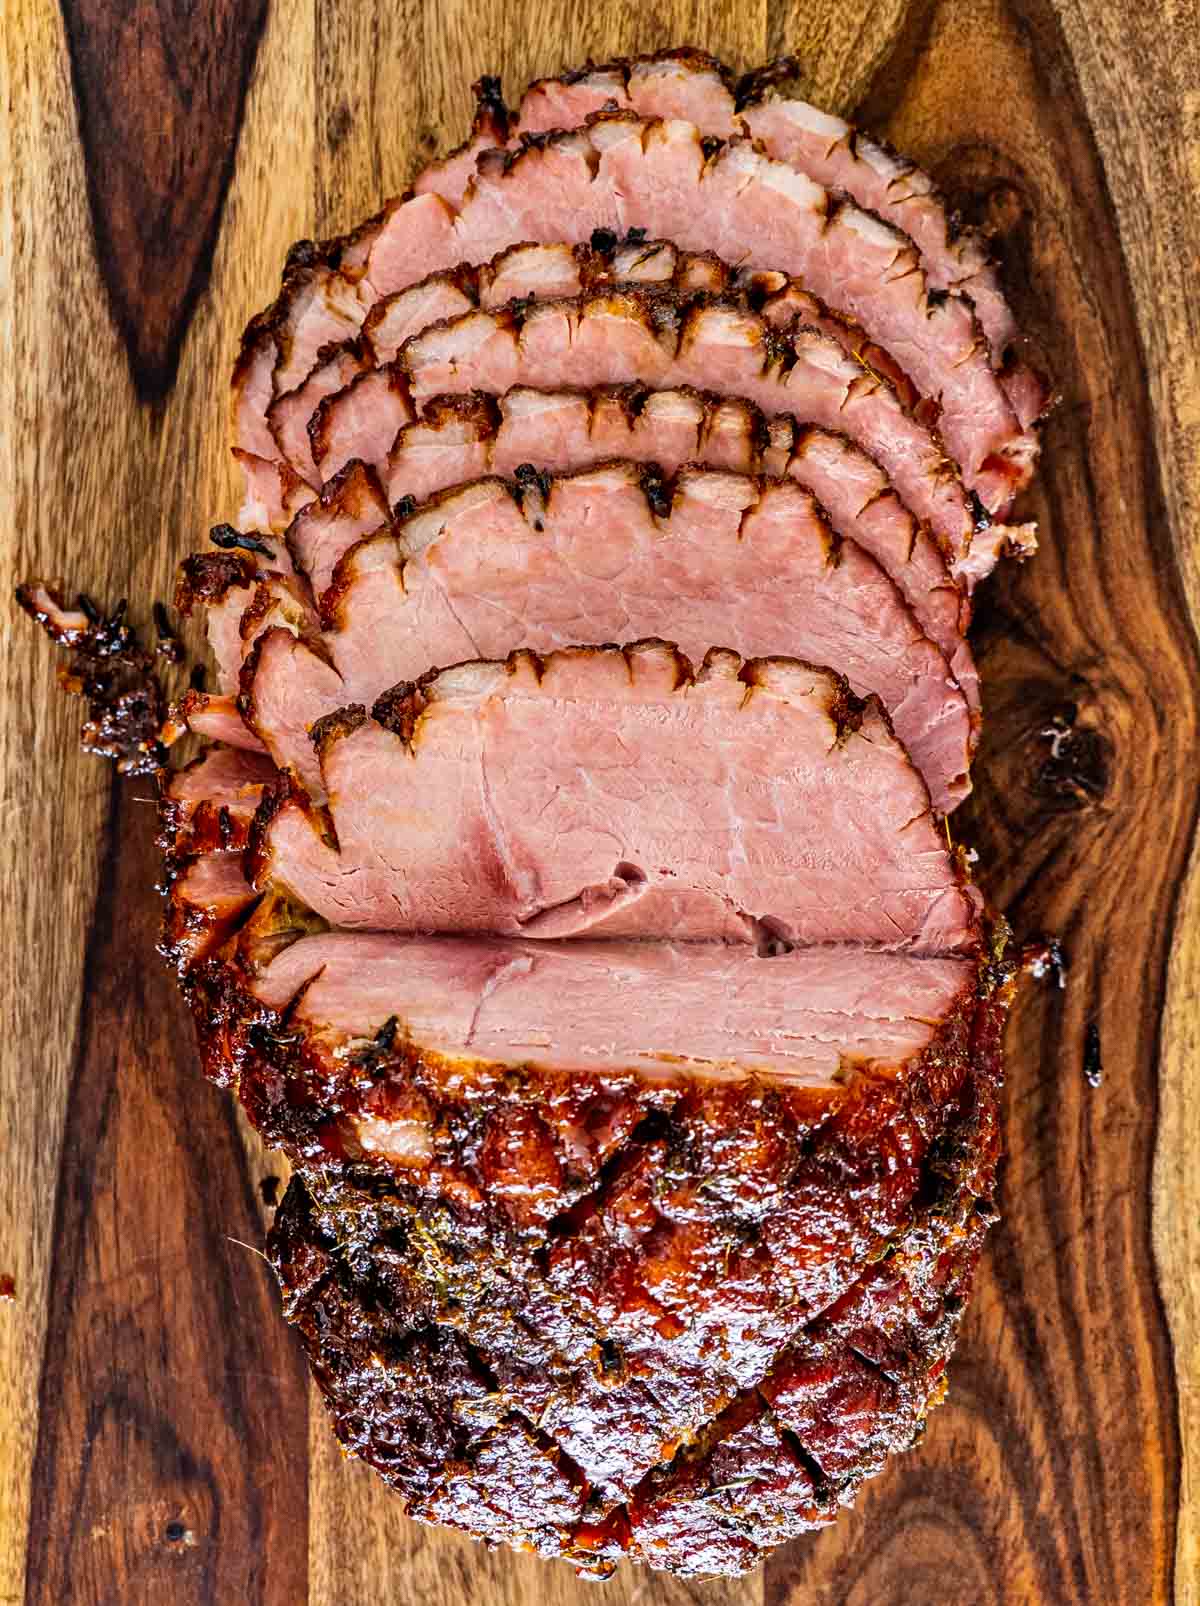 sliced up bourbon glazed baked ham on a cutting board.